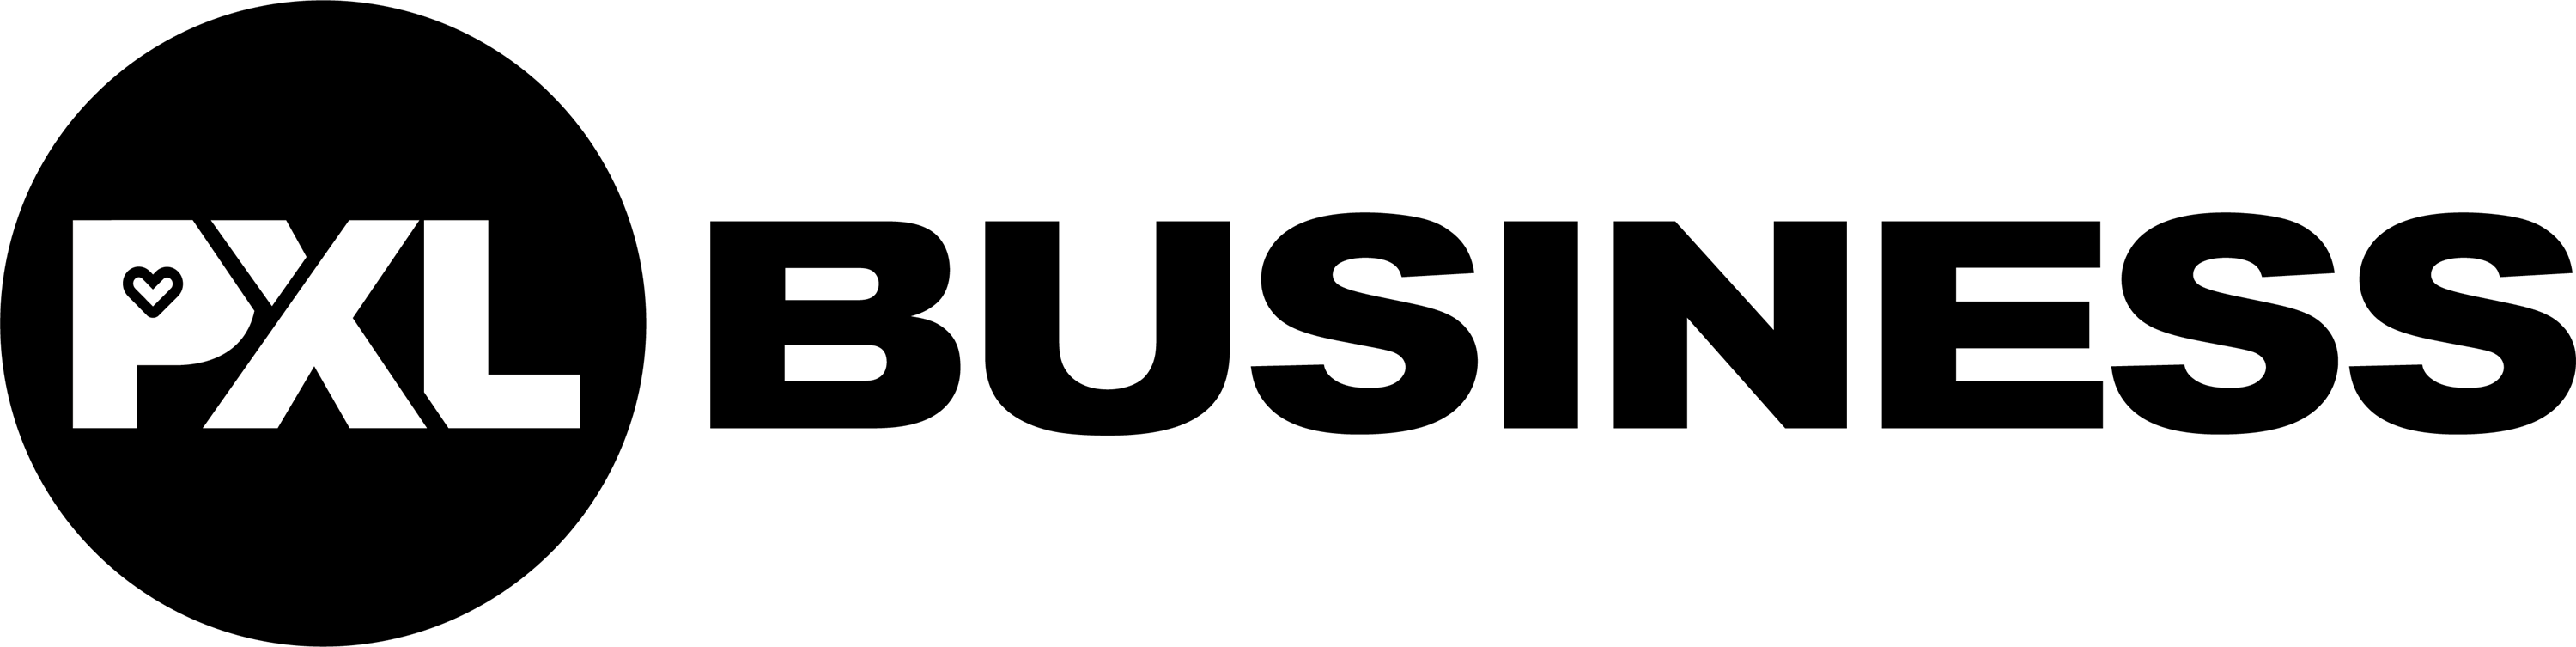 Logo PXL-Business